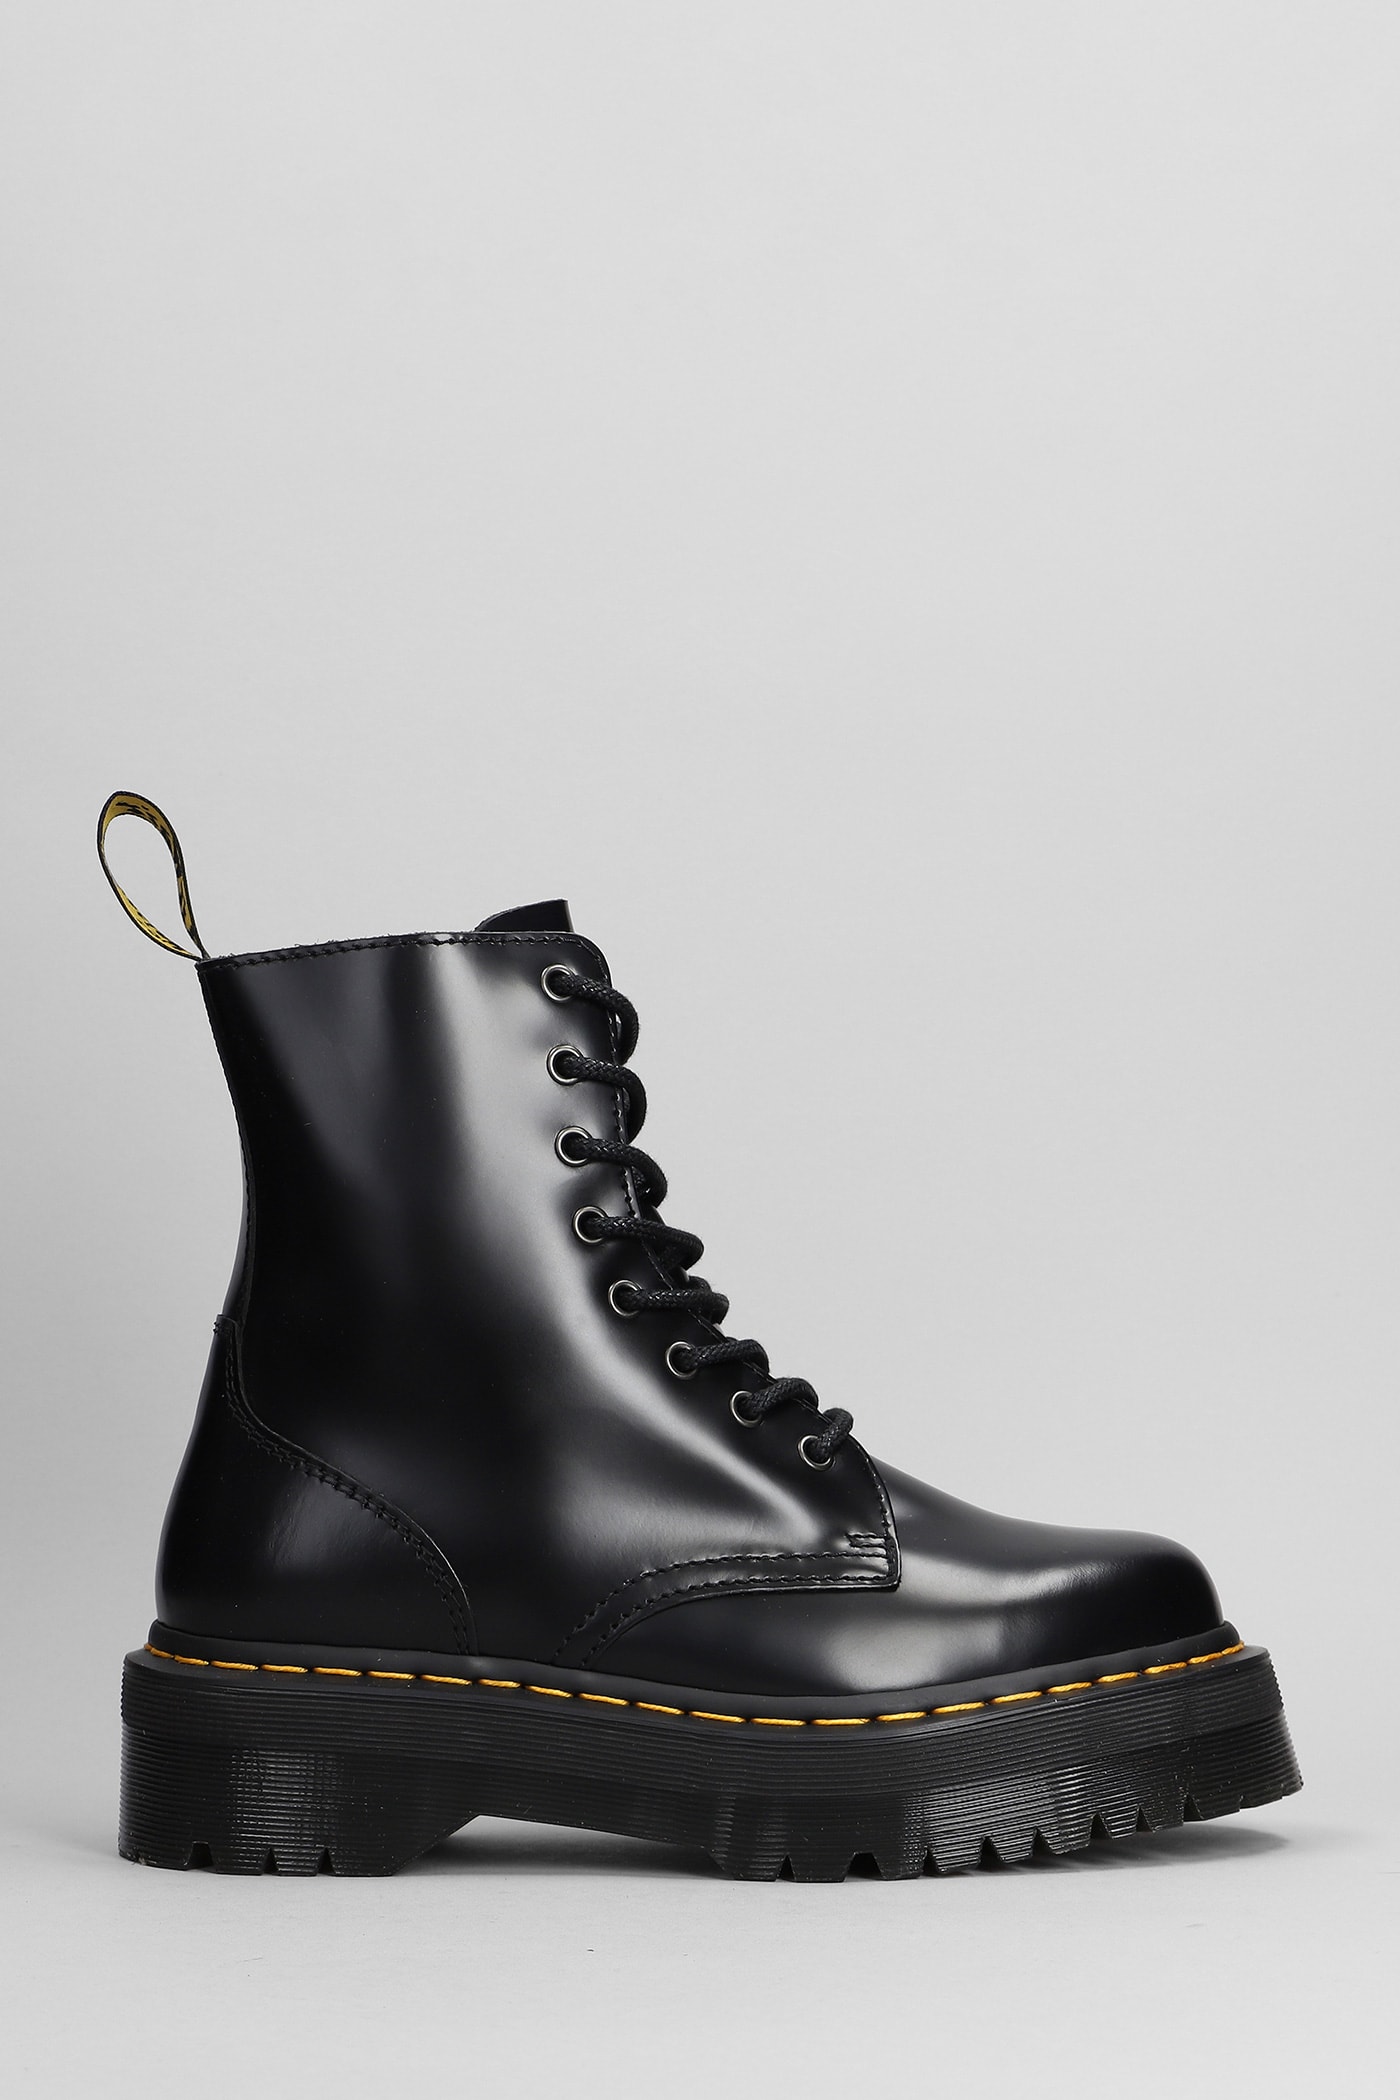 Jadon Combat Boots In Black Leather